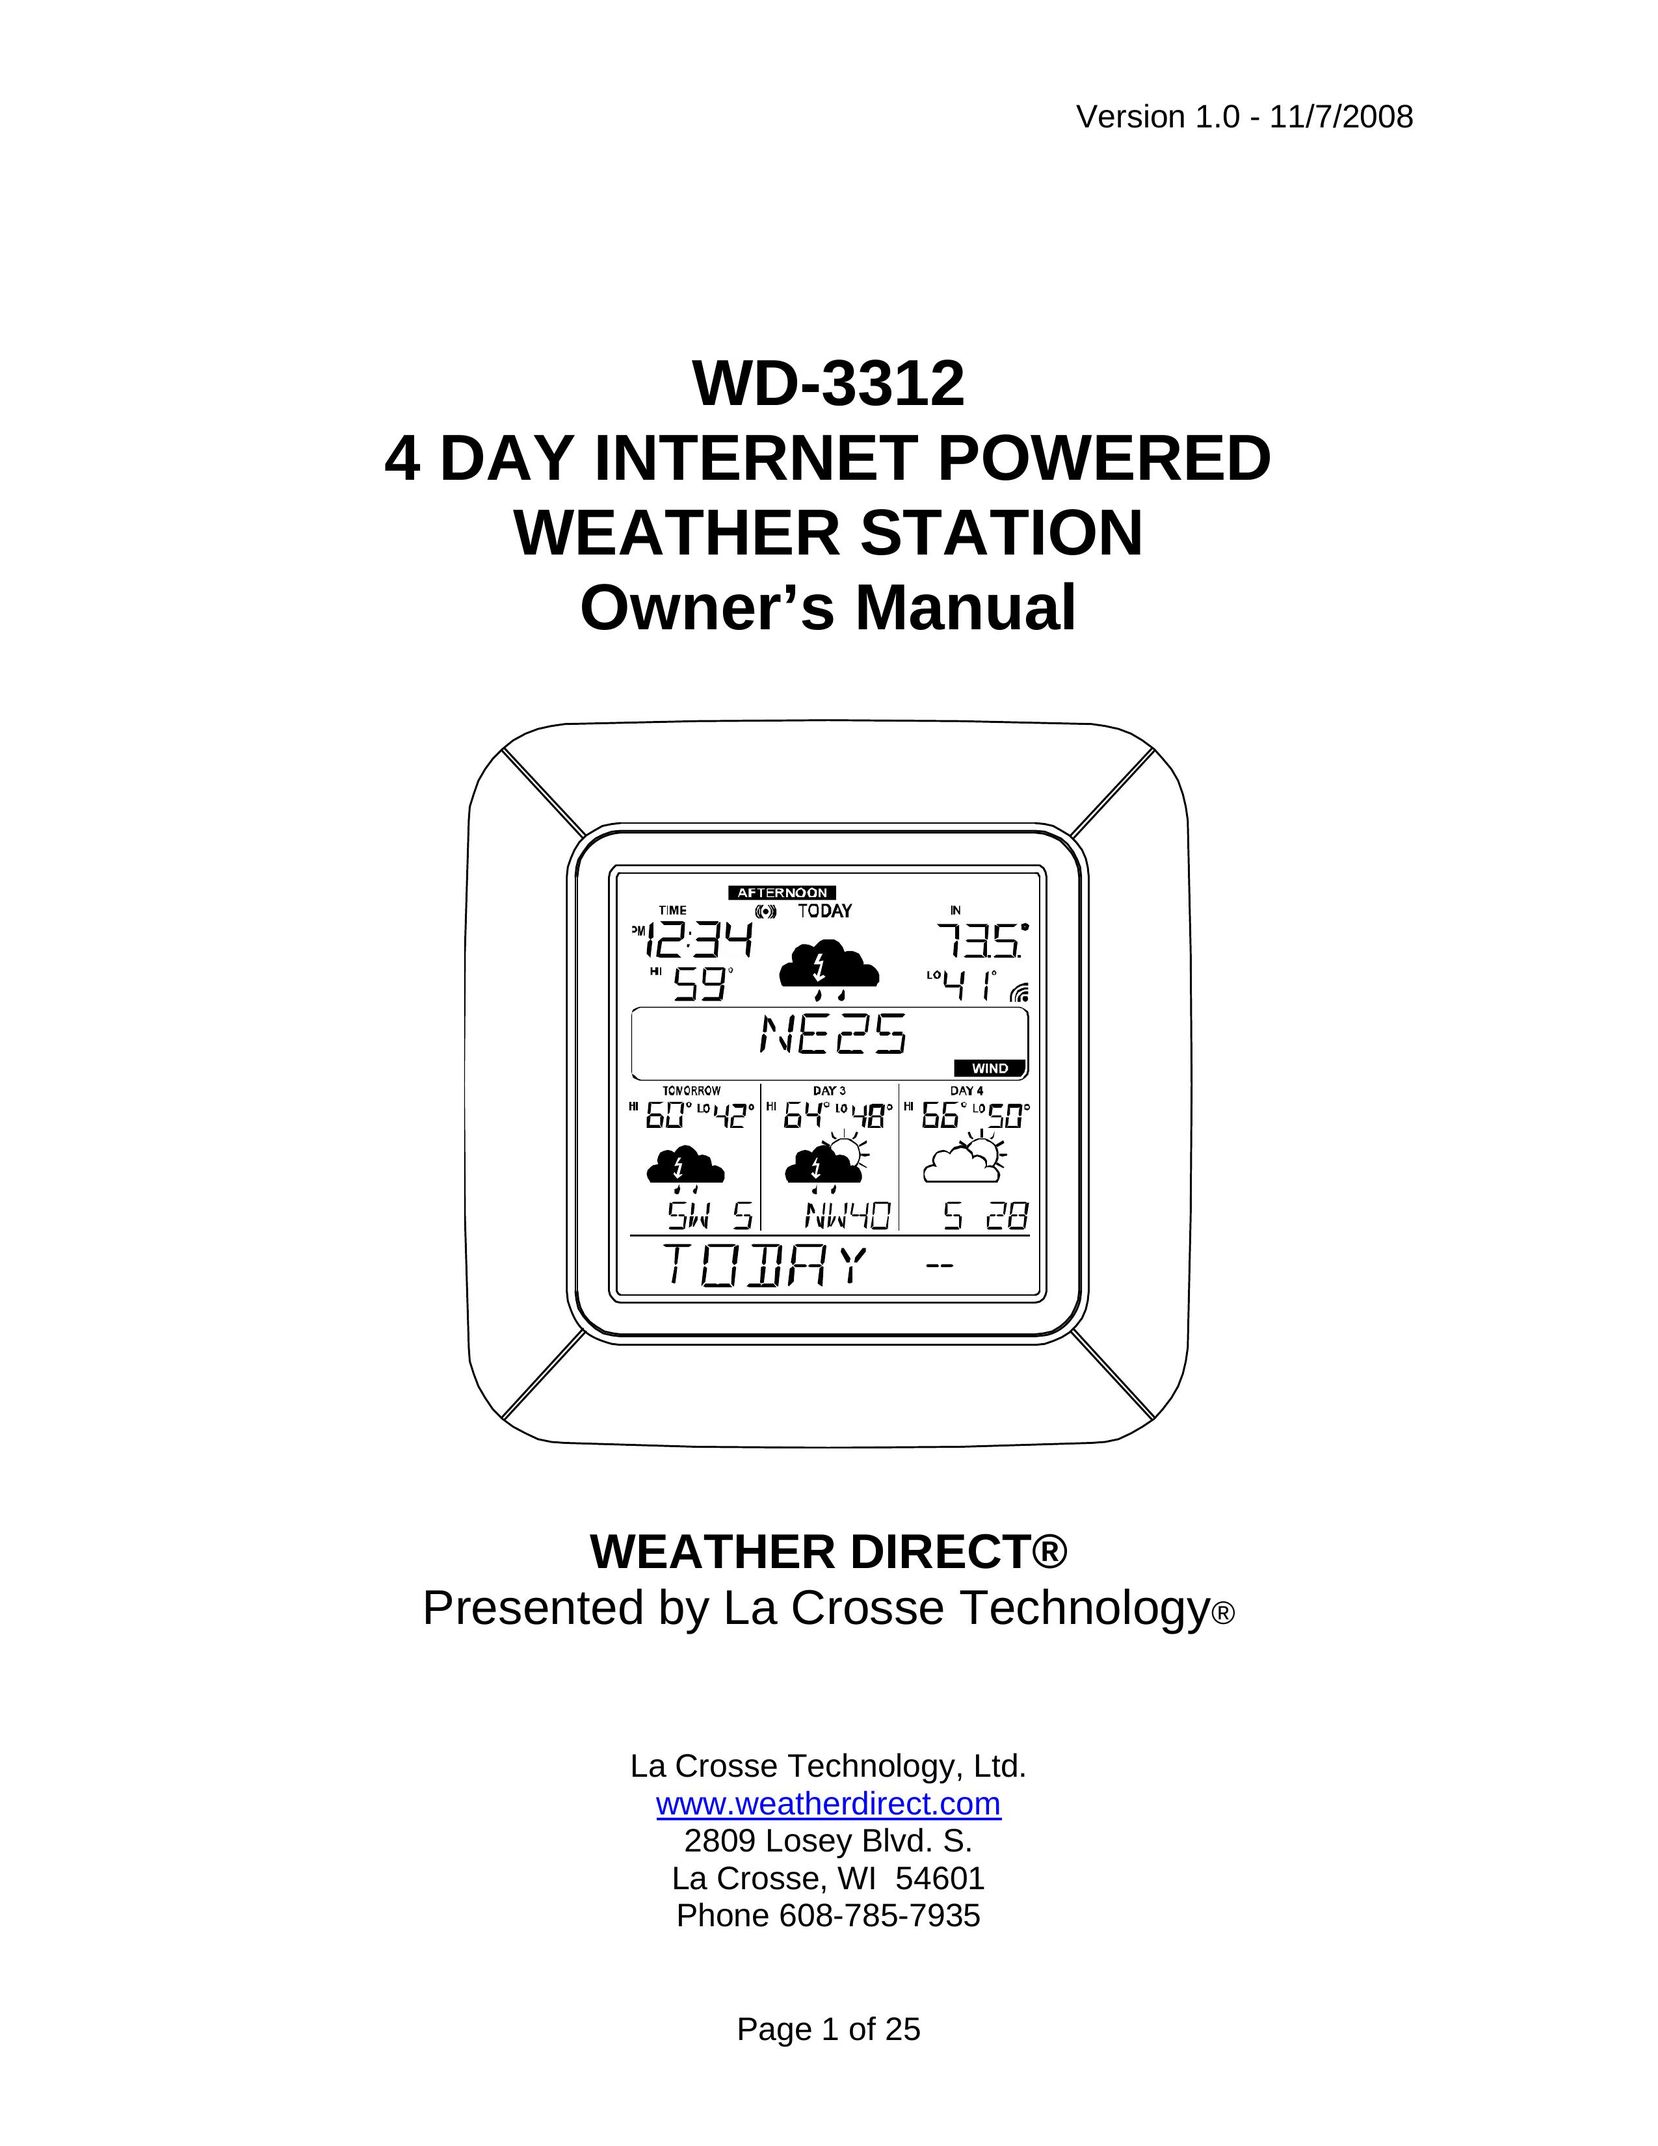 La Crosse Technology WD-3312 Portable Radio User Manual